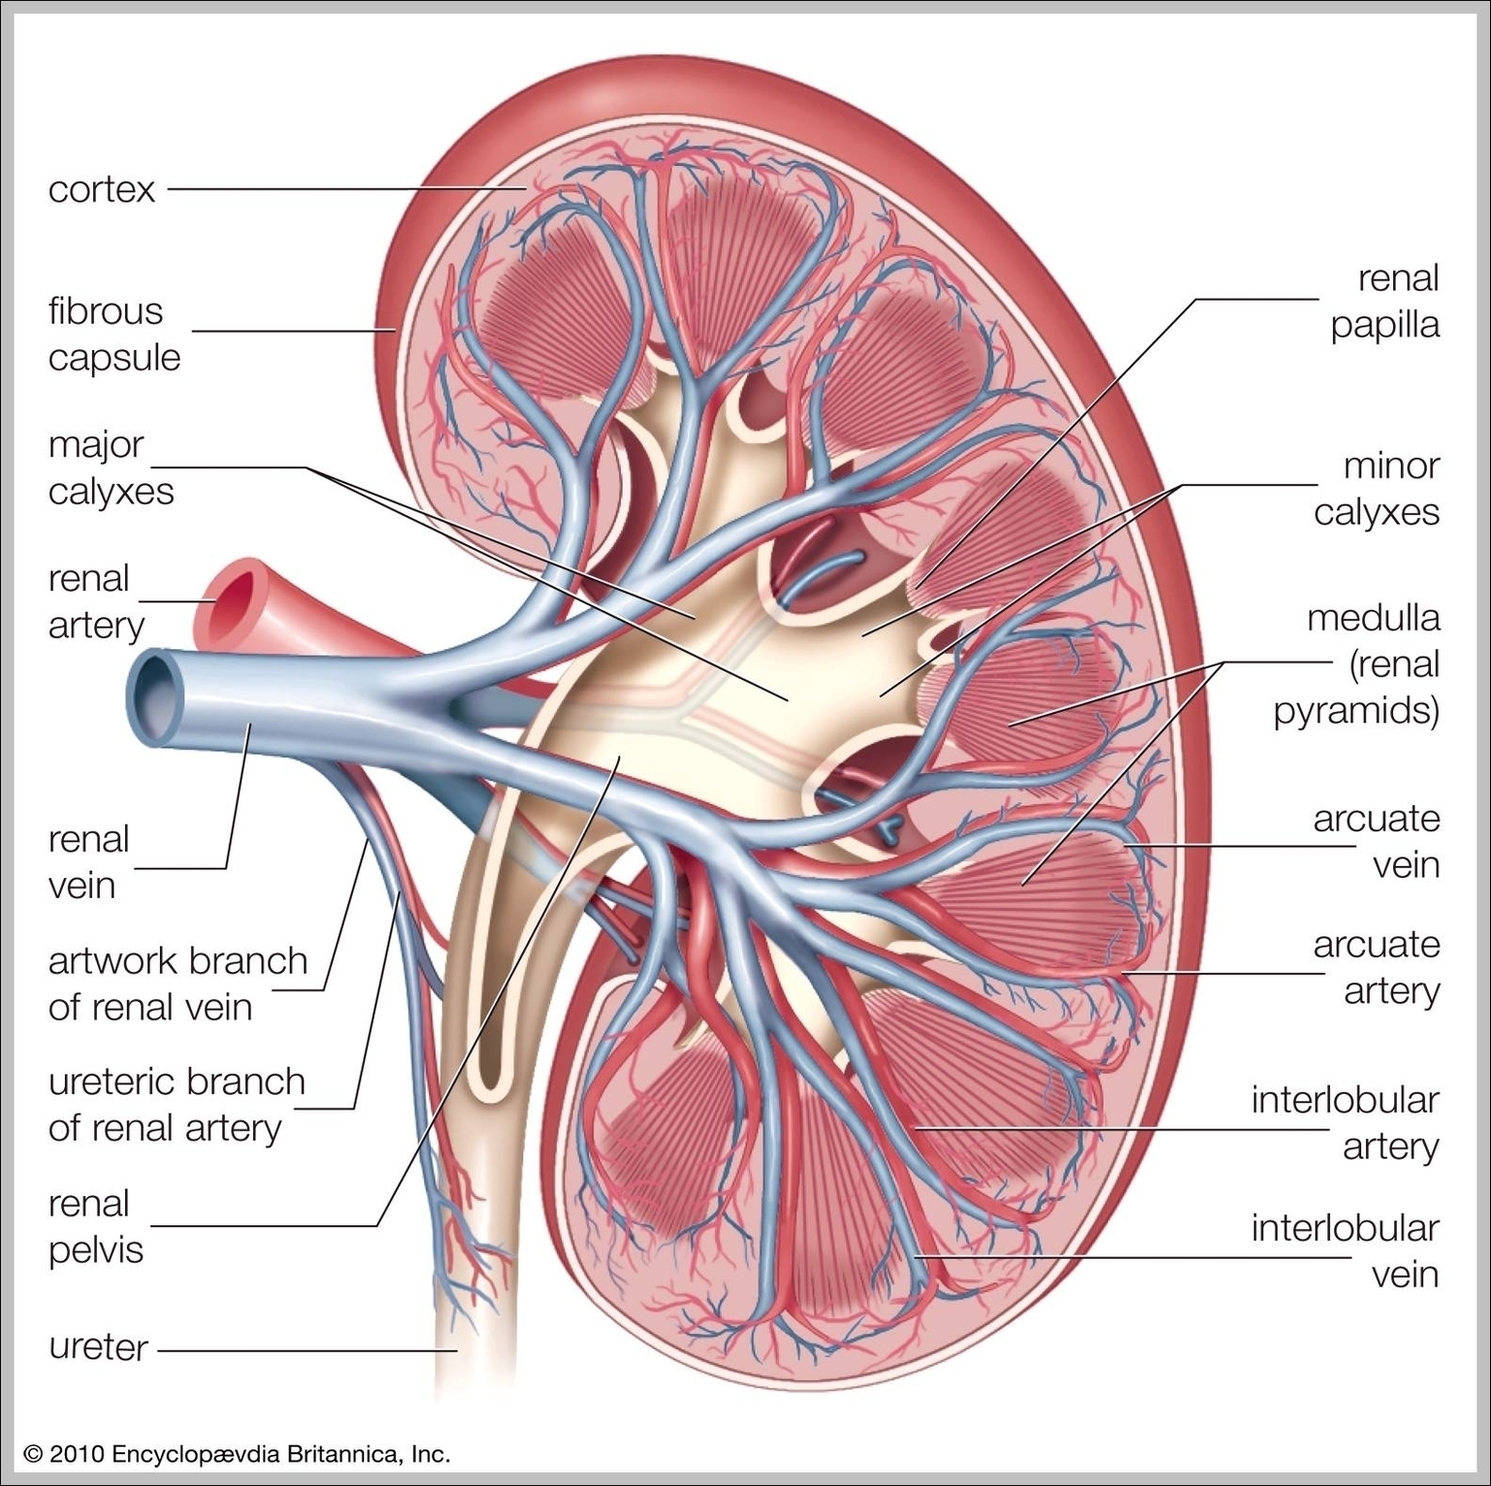 Human Anatomy Kidney Location Image